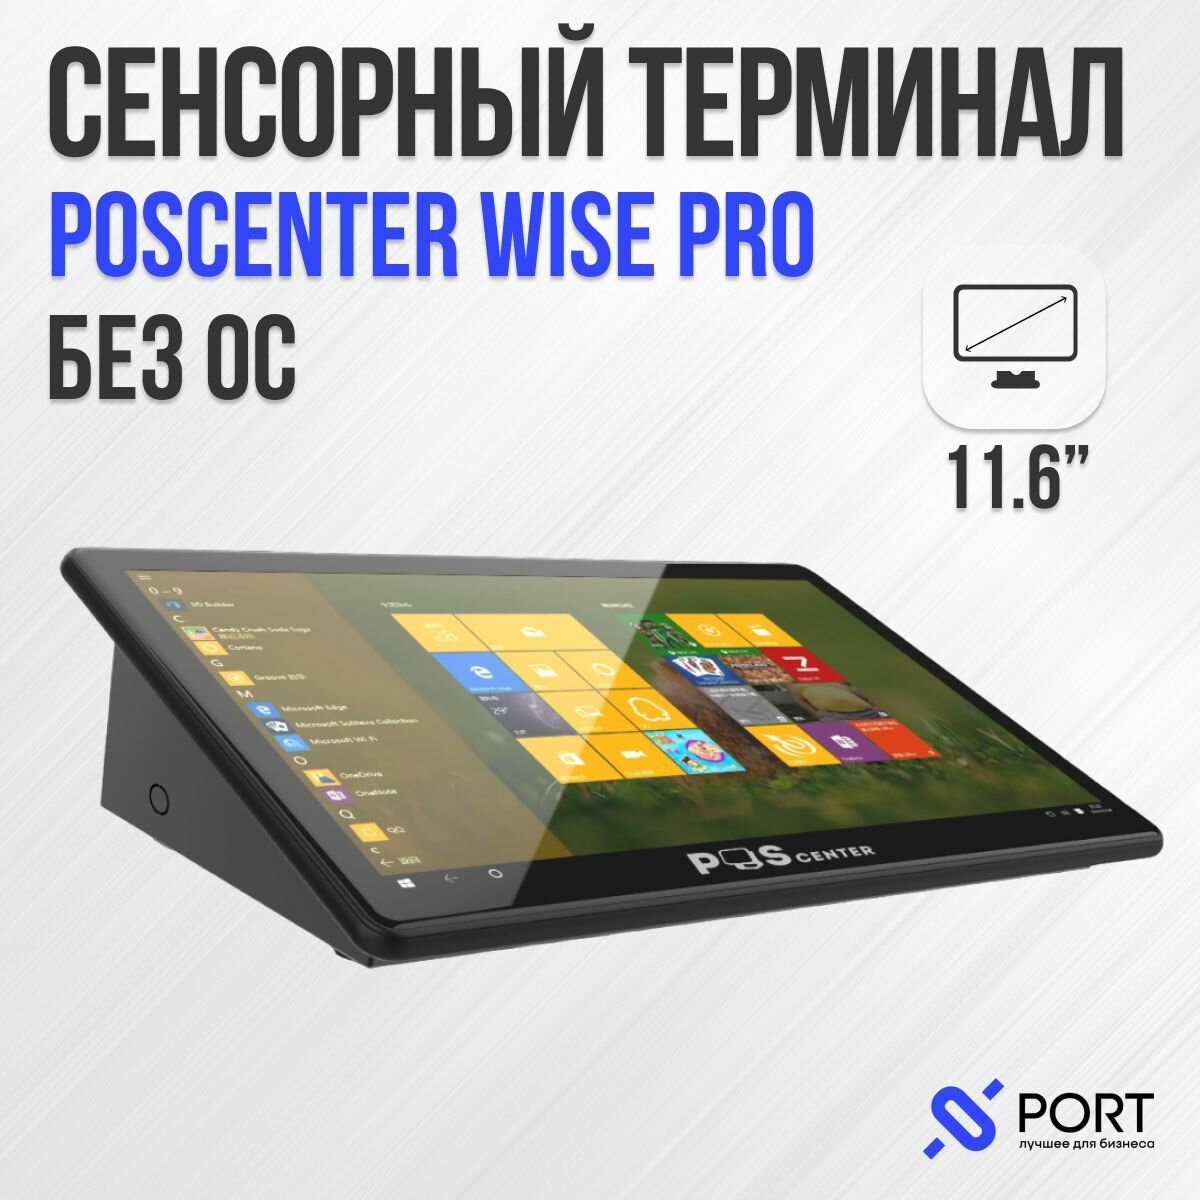 Сенсорный pos терминал poscenter Wise pro, 11,6", RAM 4Gb, SSD 128Gb, WiFi, BT, без ОС